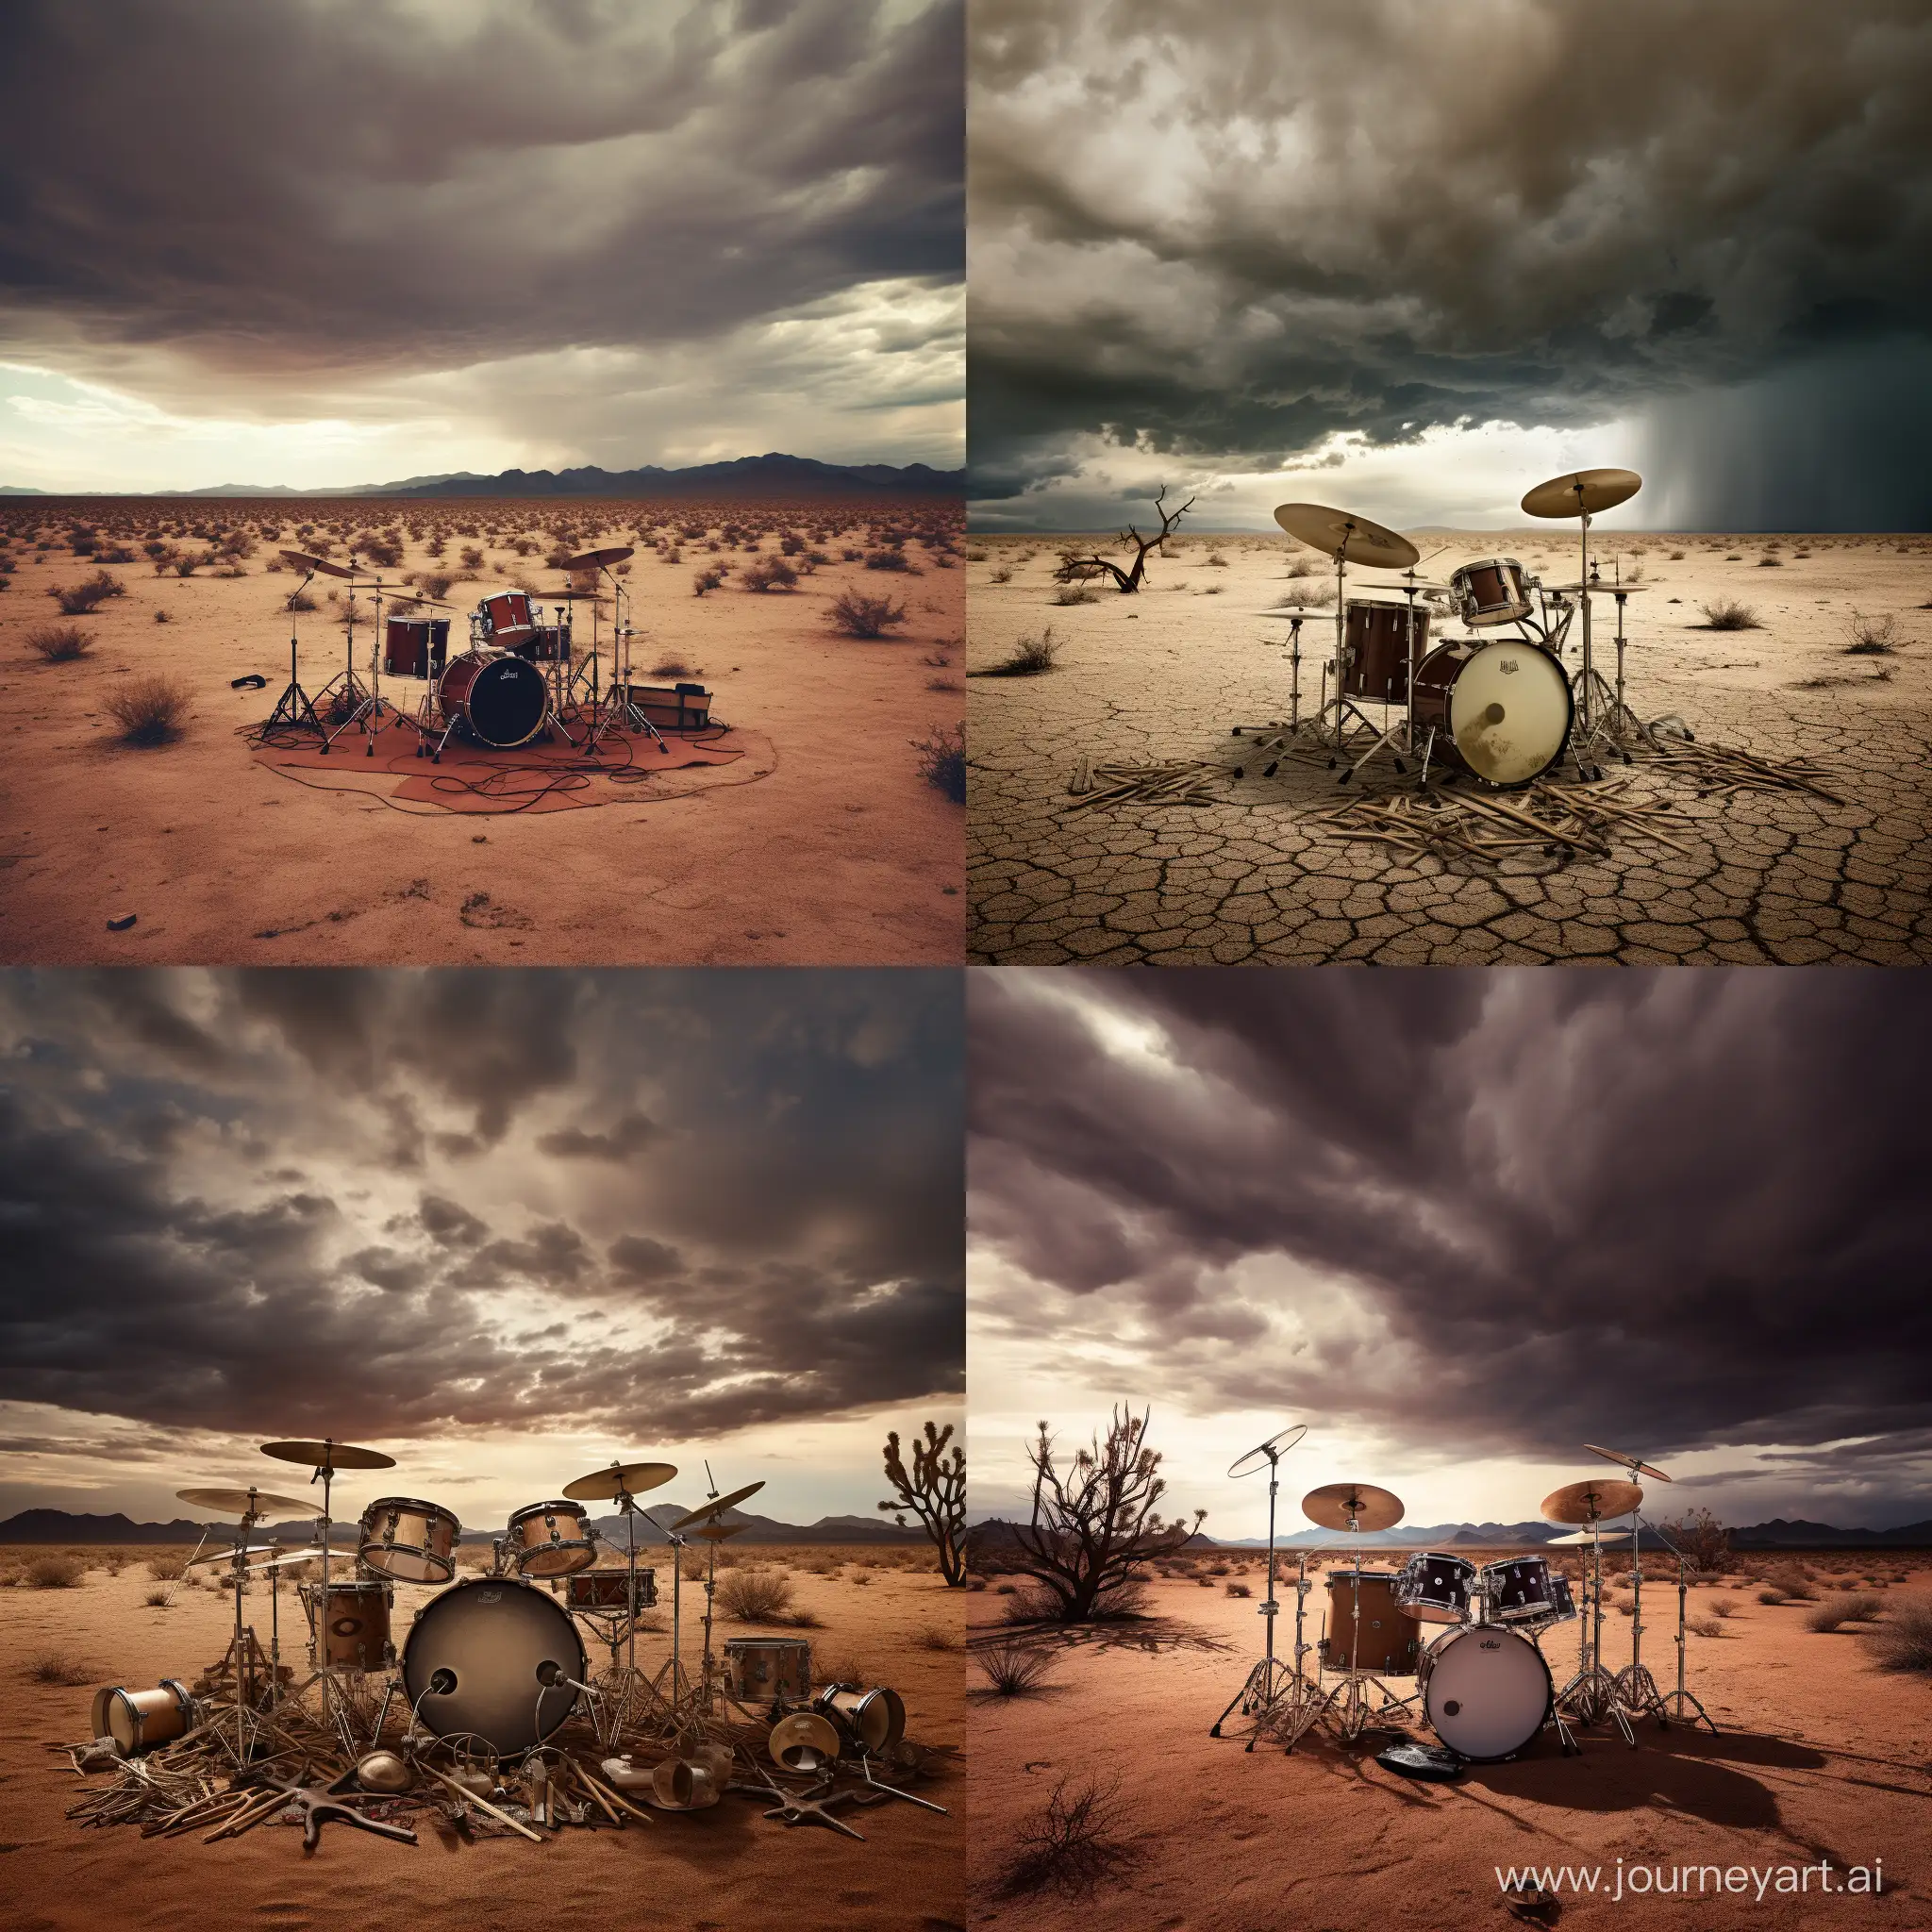 Desert-Drum-Kit-Under-Stormy-Sky